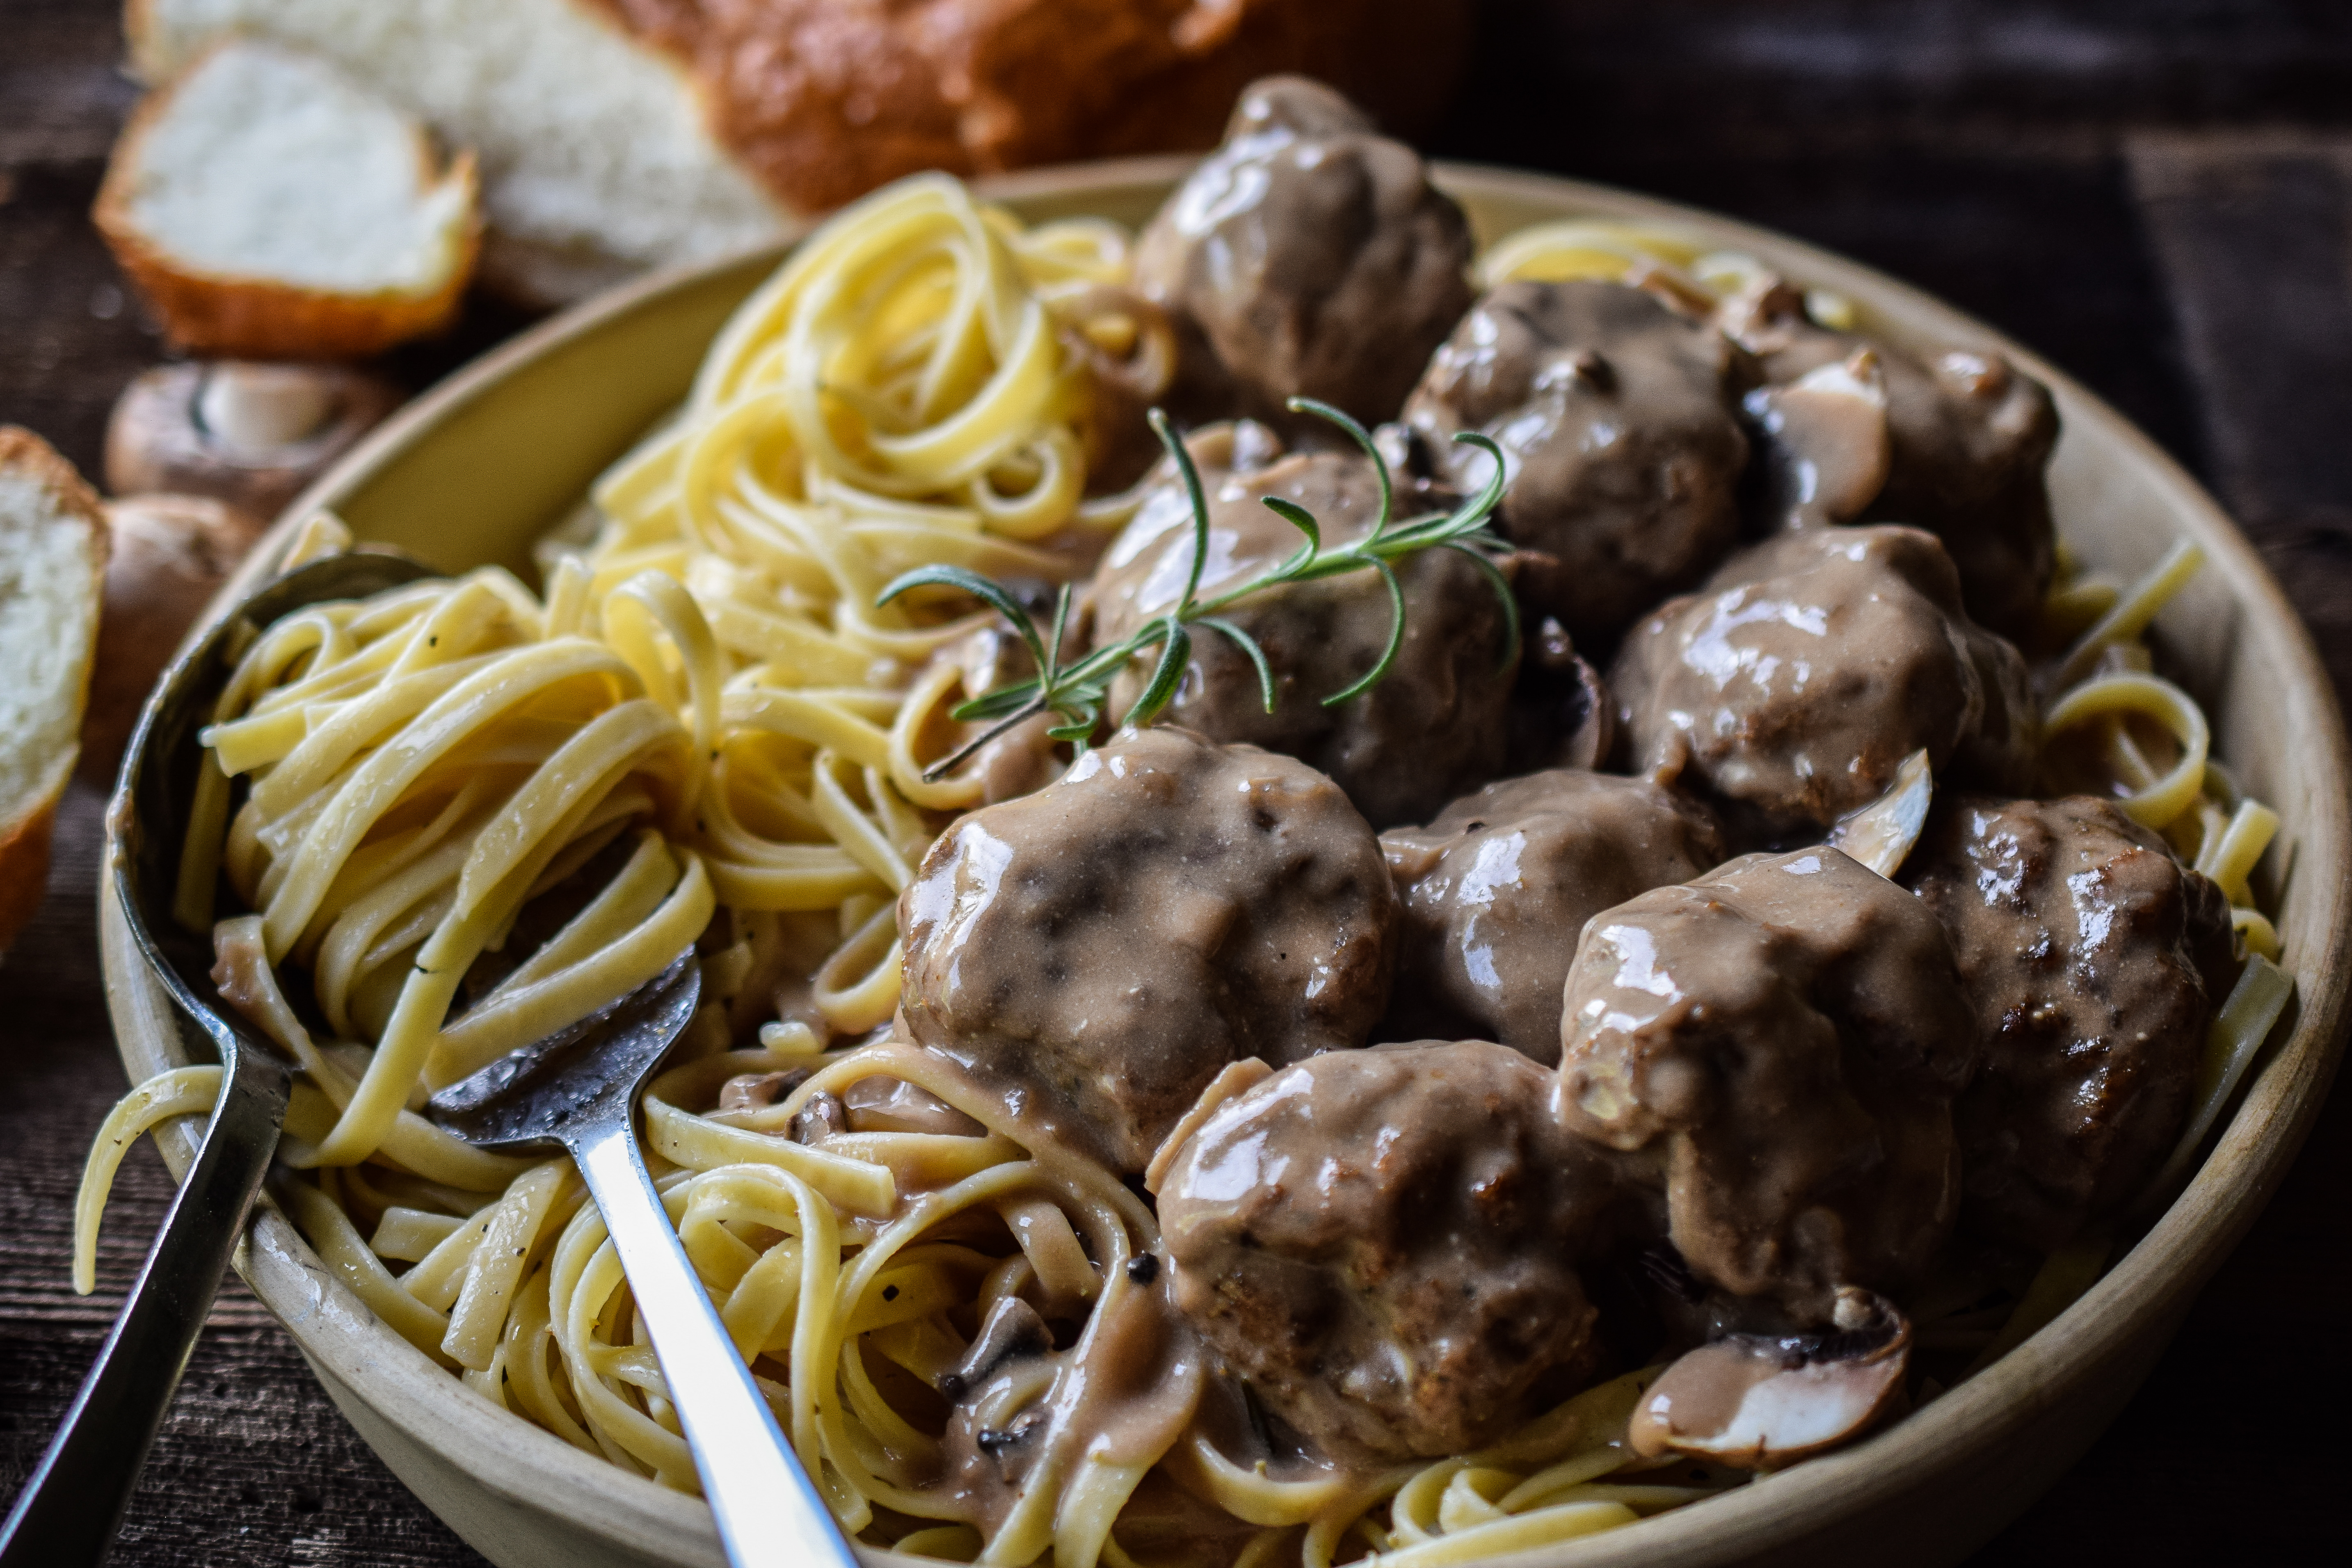 Meatballs in a beefy mushroom gravy with pasta.